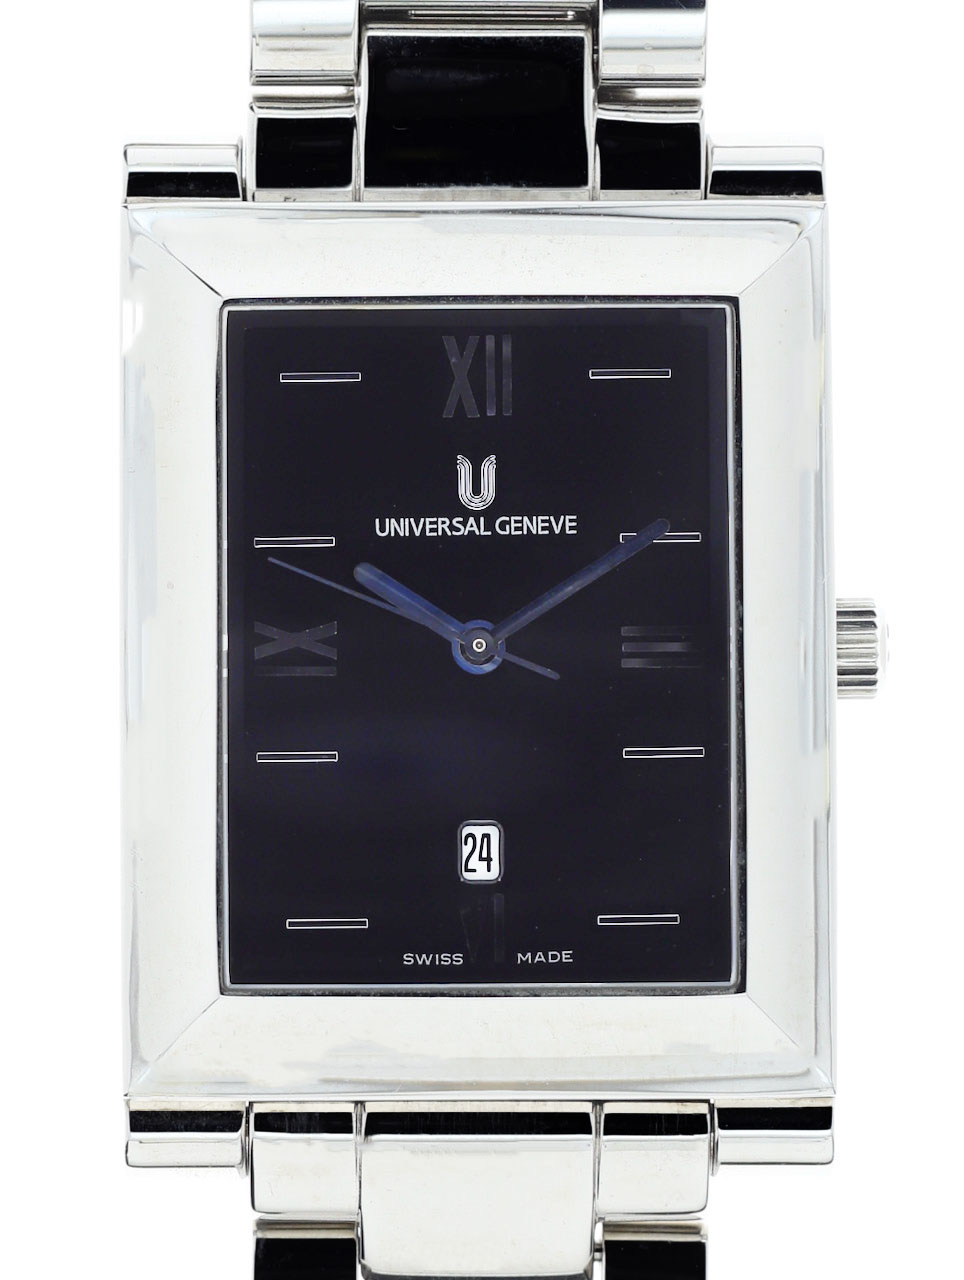 Vintage watch Elektronika 5 29367 USSR men's 1990s melody | eBay